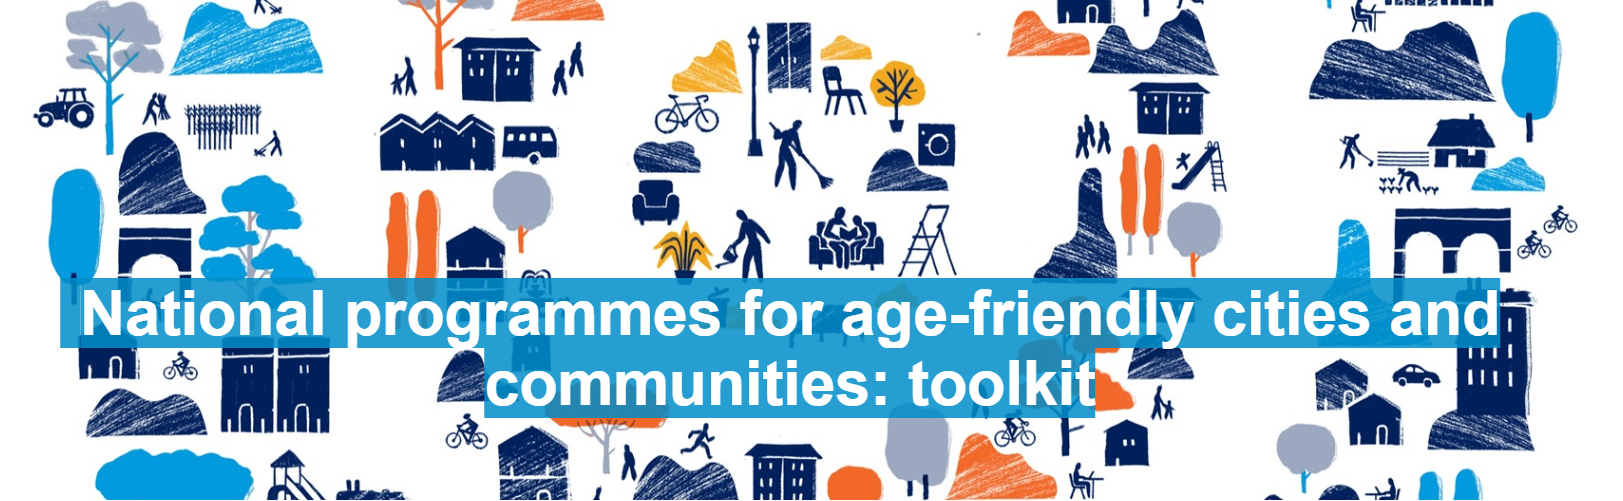 NationalProgrammesForAge-friendlyCities&Communities-WHO-banner